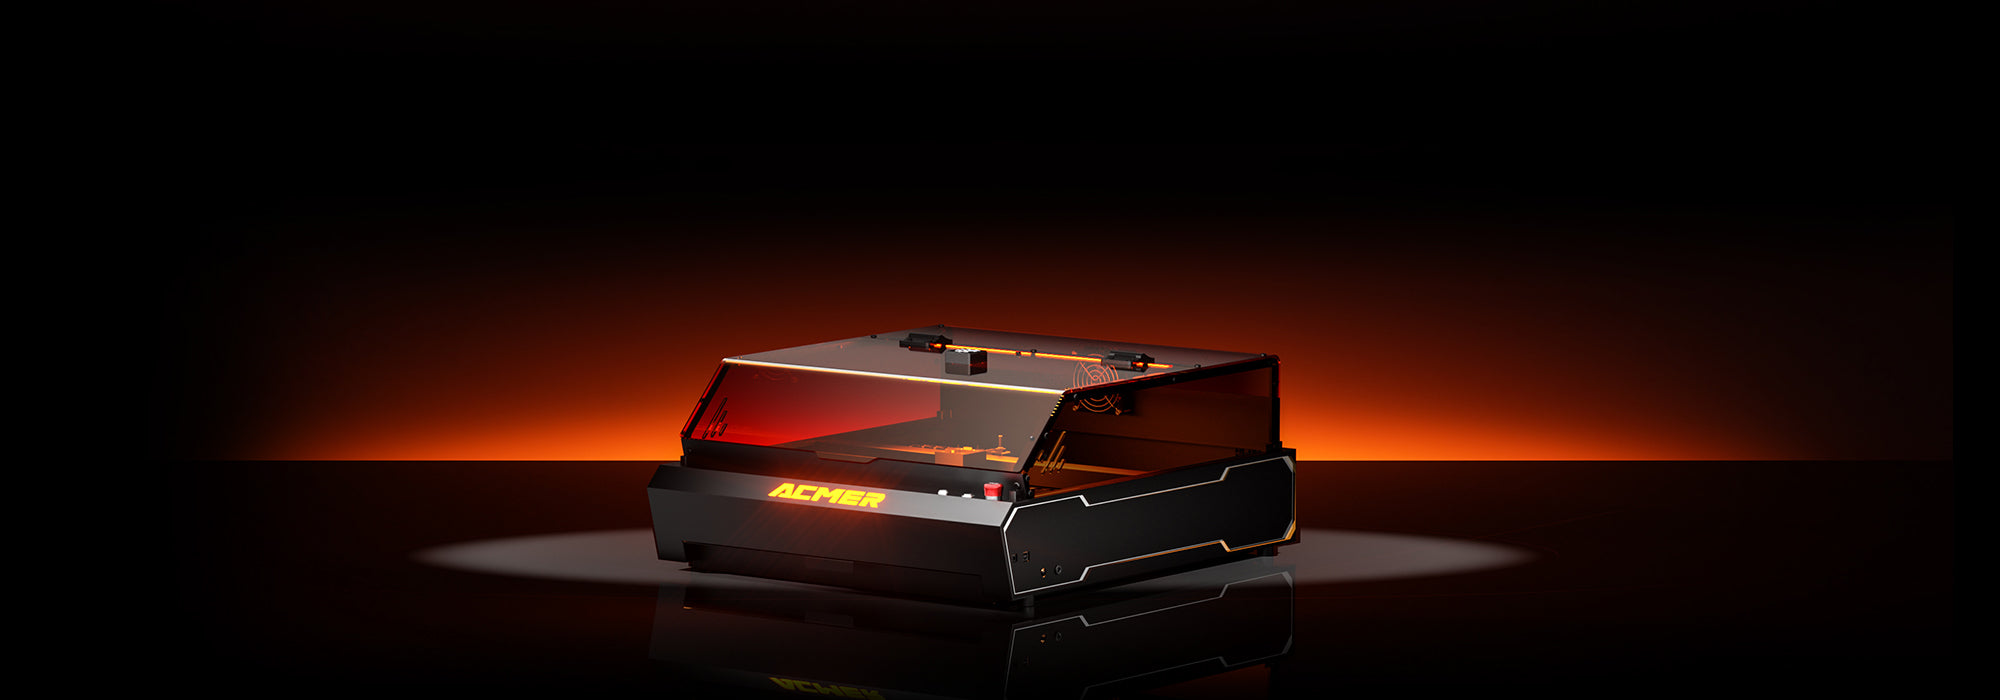 ACMER P3 IR＆Diode Enclosed Dual Laser Engraver